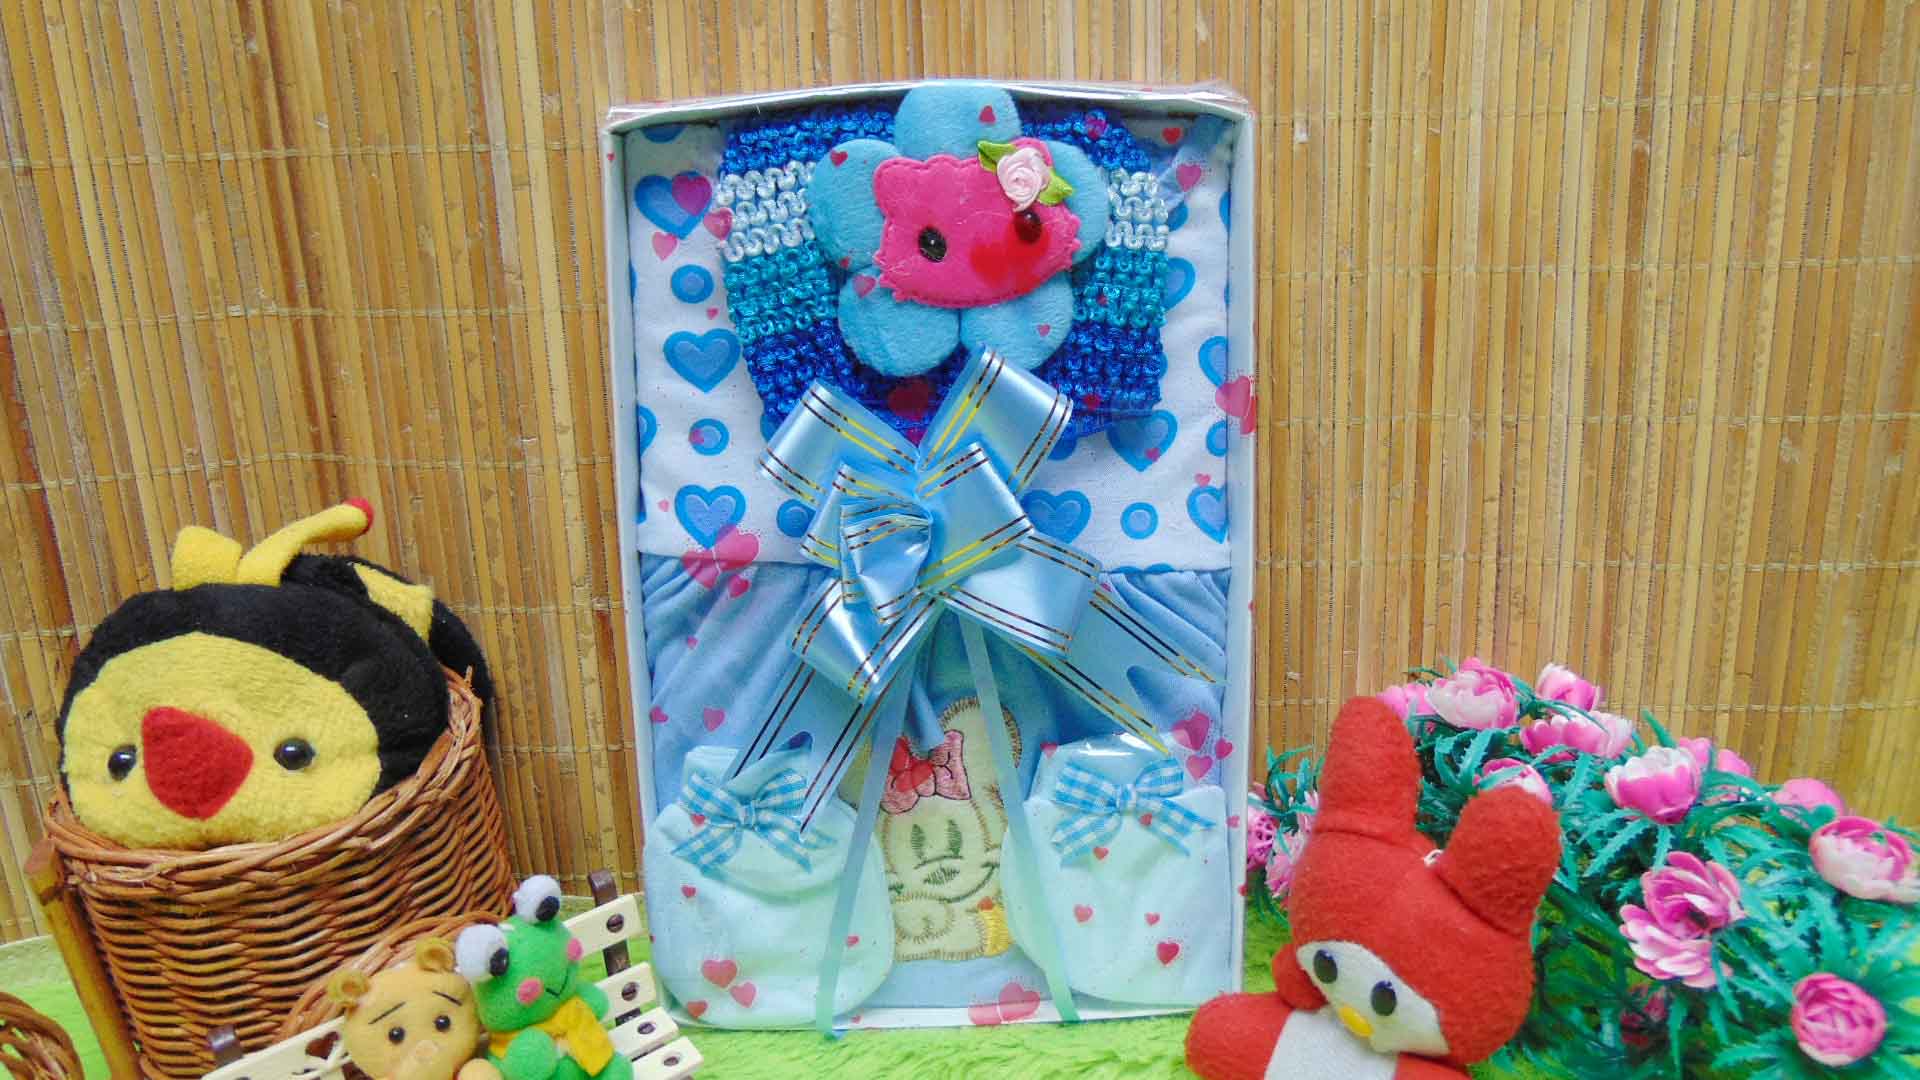 FREE KARTU UCAPAN Kado Lahiran Box Paket Kado Bayi Perempuan Cewek Baby Gift Dress Mickey Love Biru Cantik 57 terdiri Dress bayi 0-9bln,turban serta sarung tangan dan kaki bayi